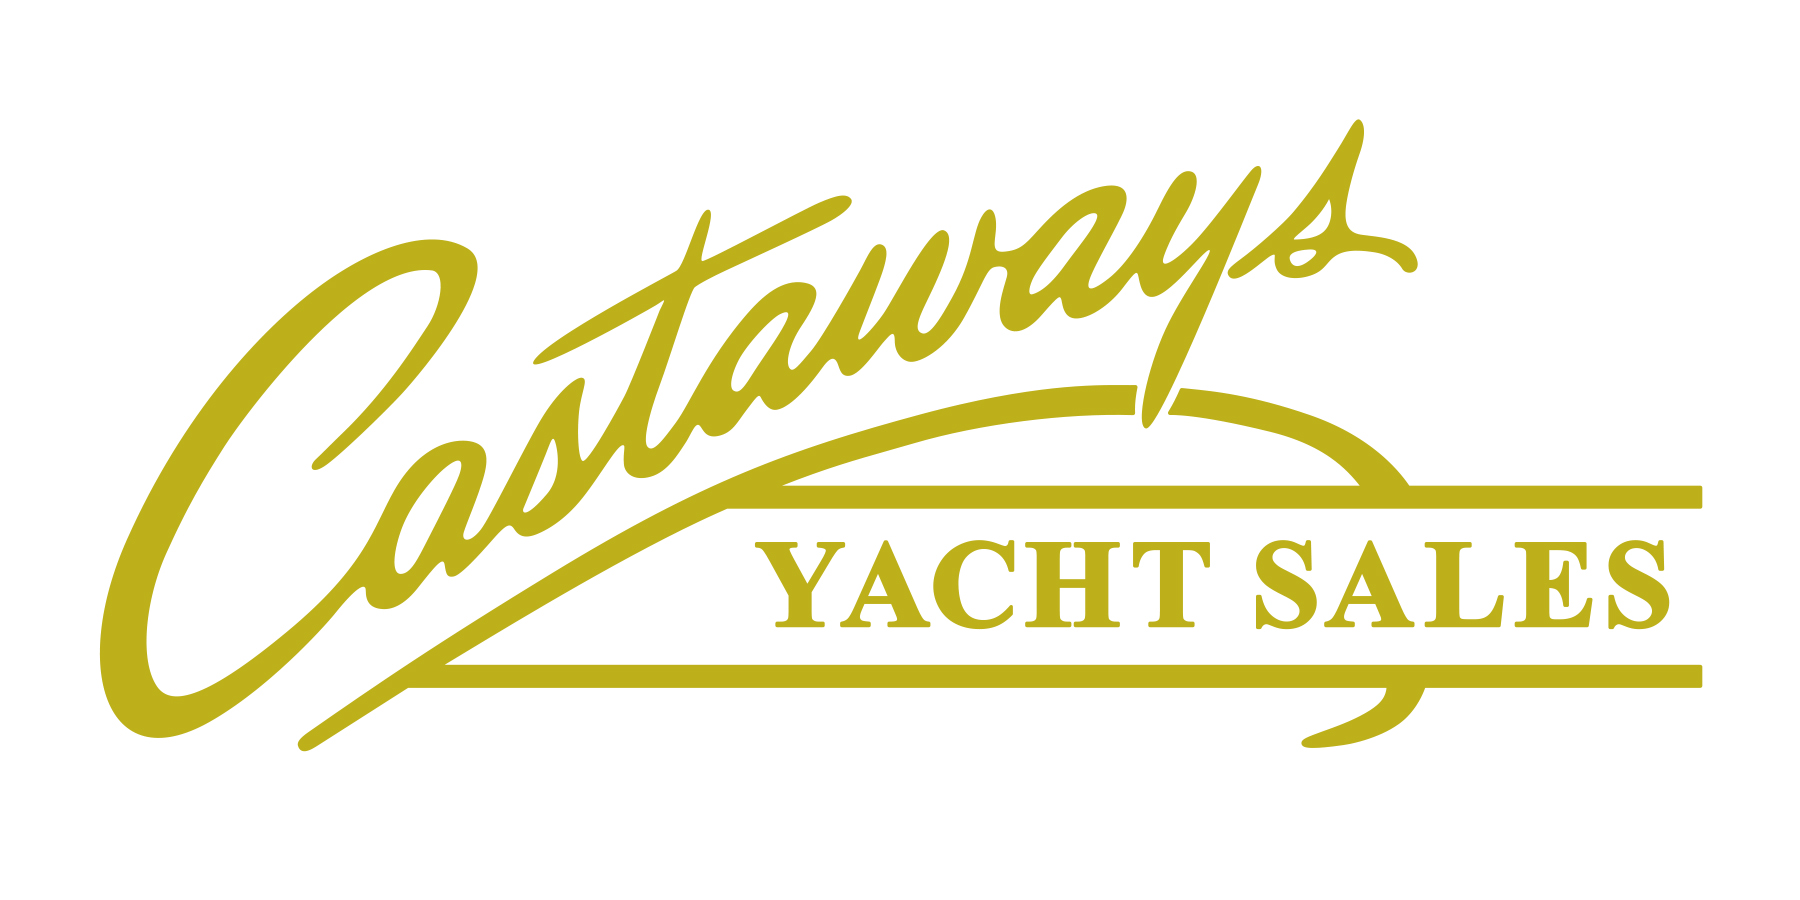 castaways yacht sales